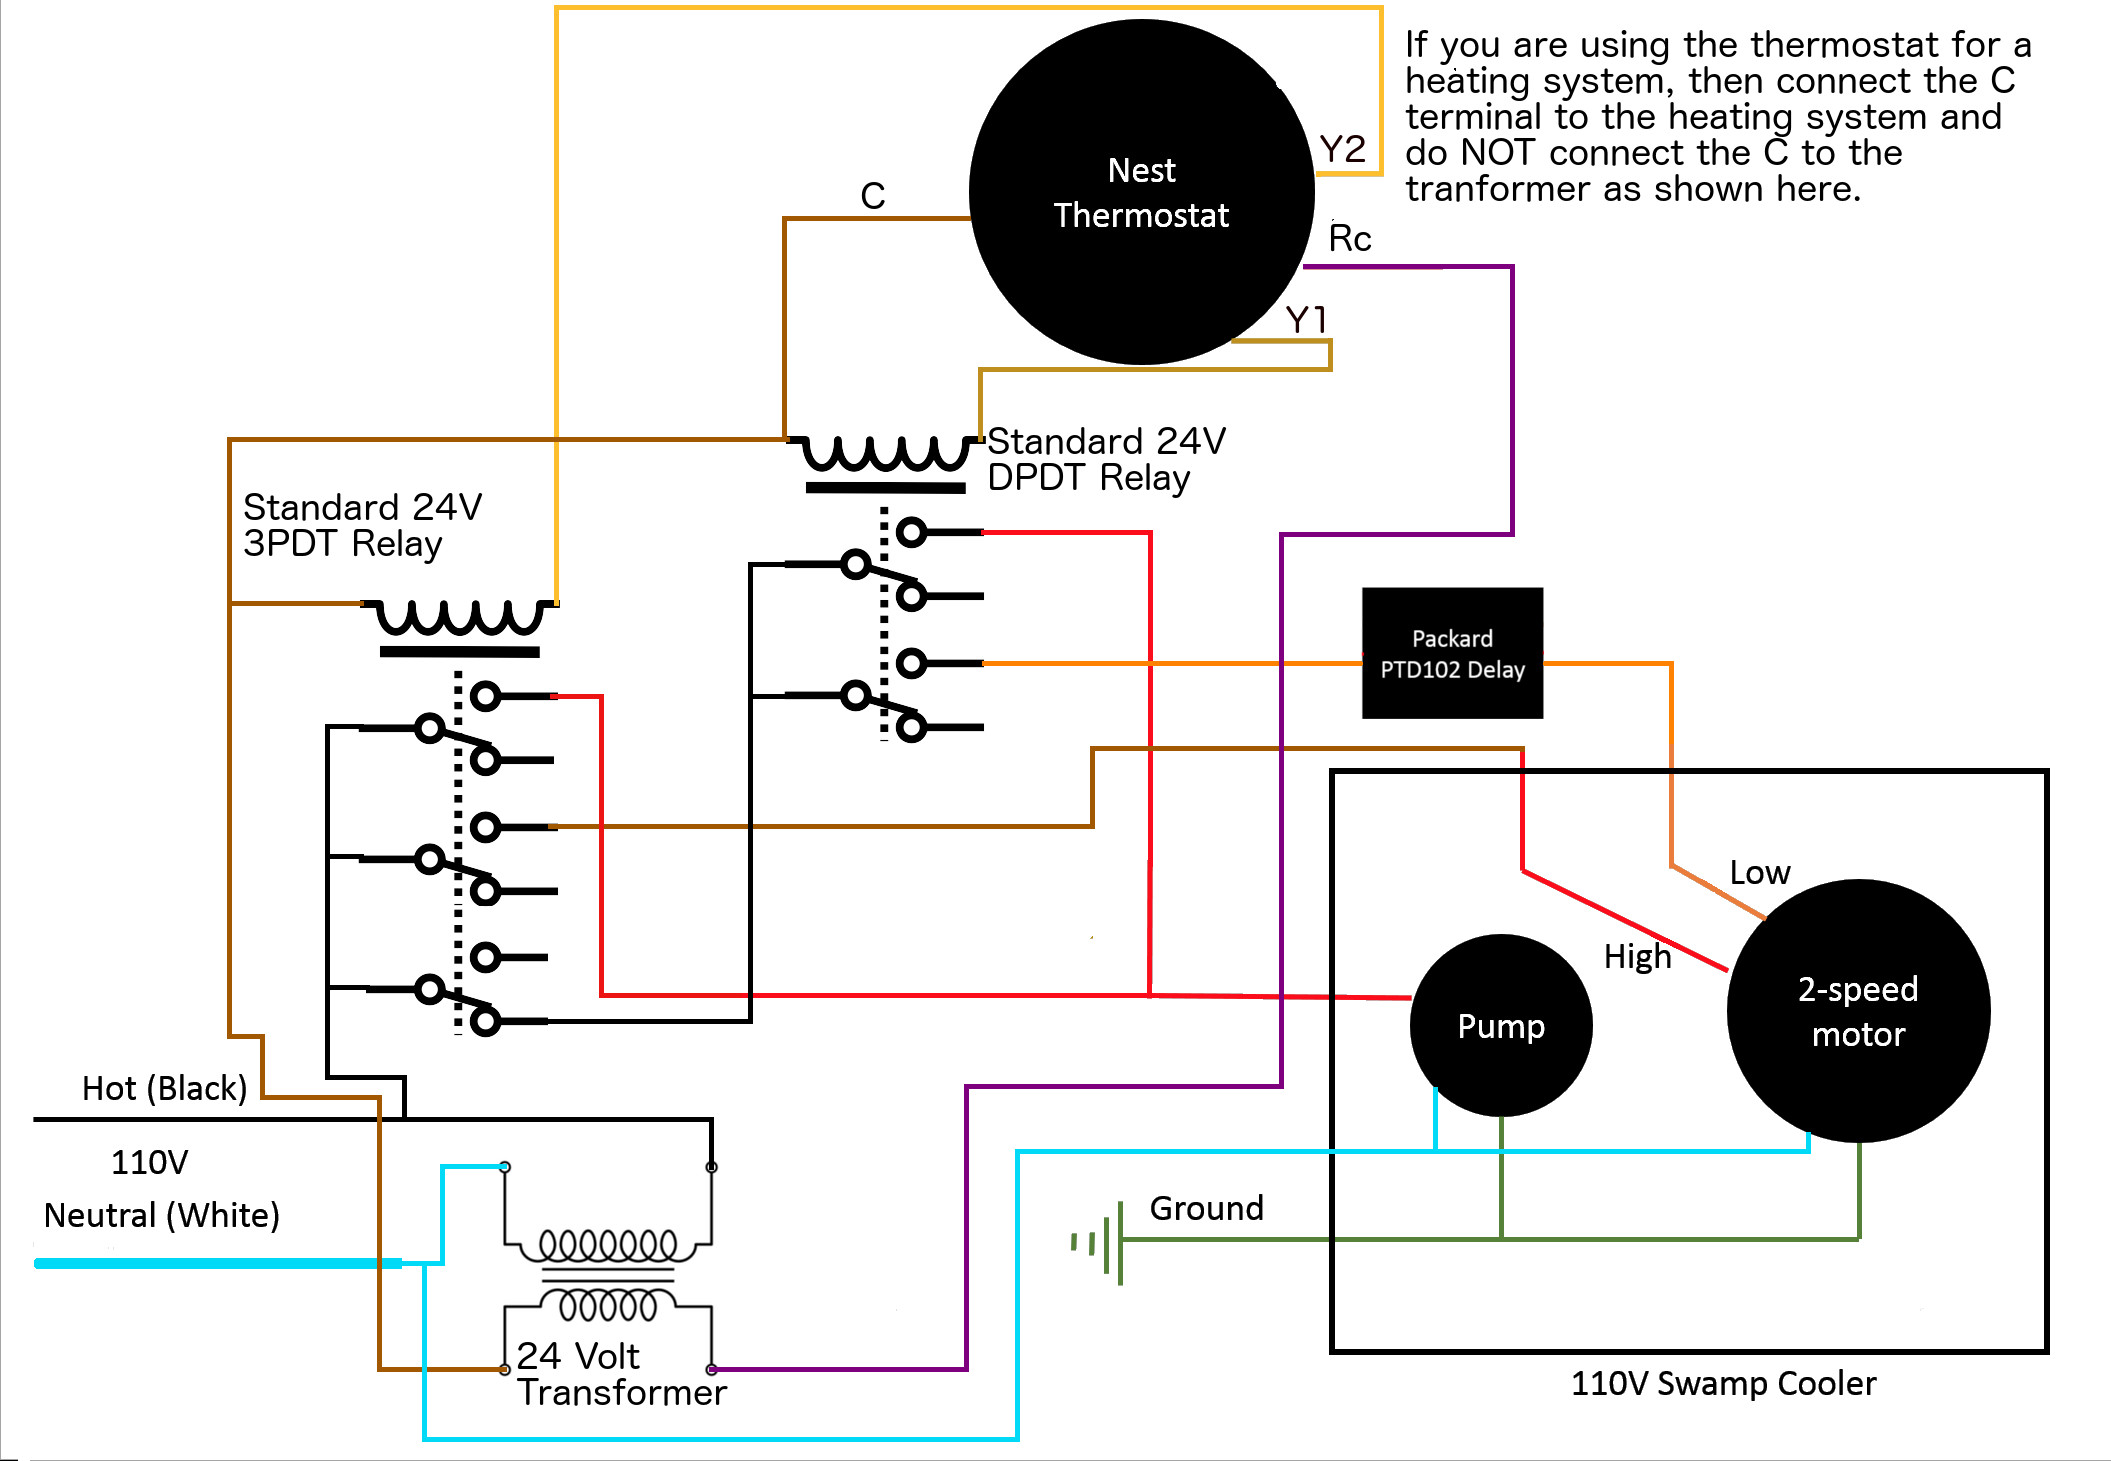 230v 2 speed motor dpdt switch wiring diagram